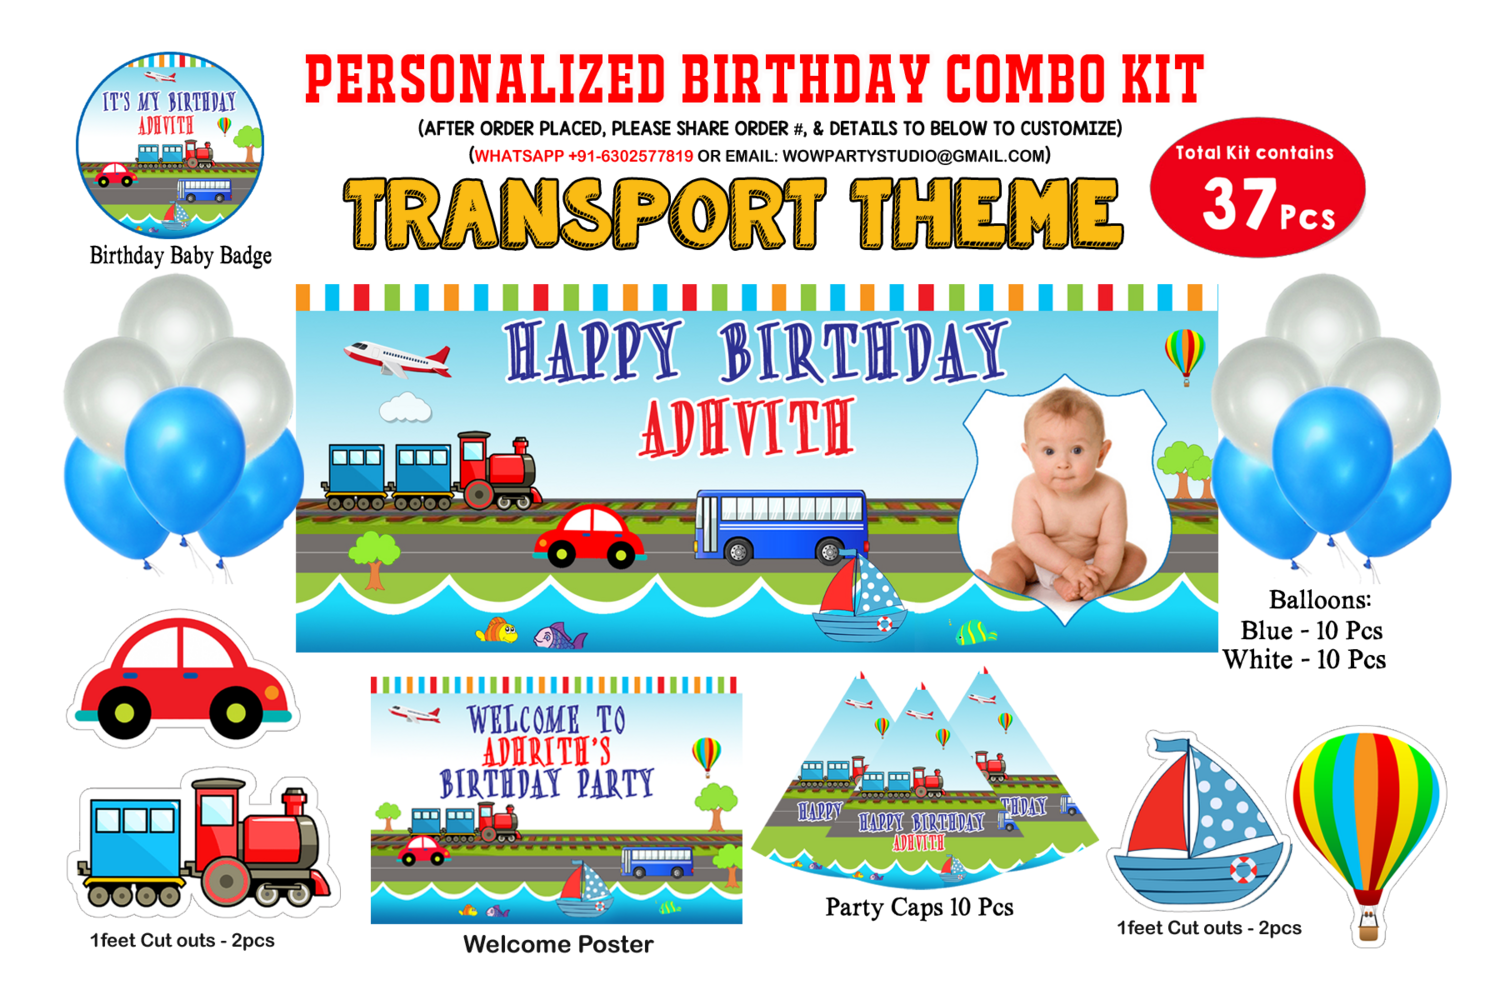 Transport Theme - Combo Kit 37Pcs With Kids Picture